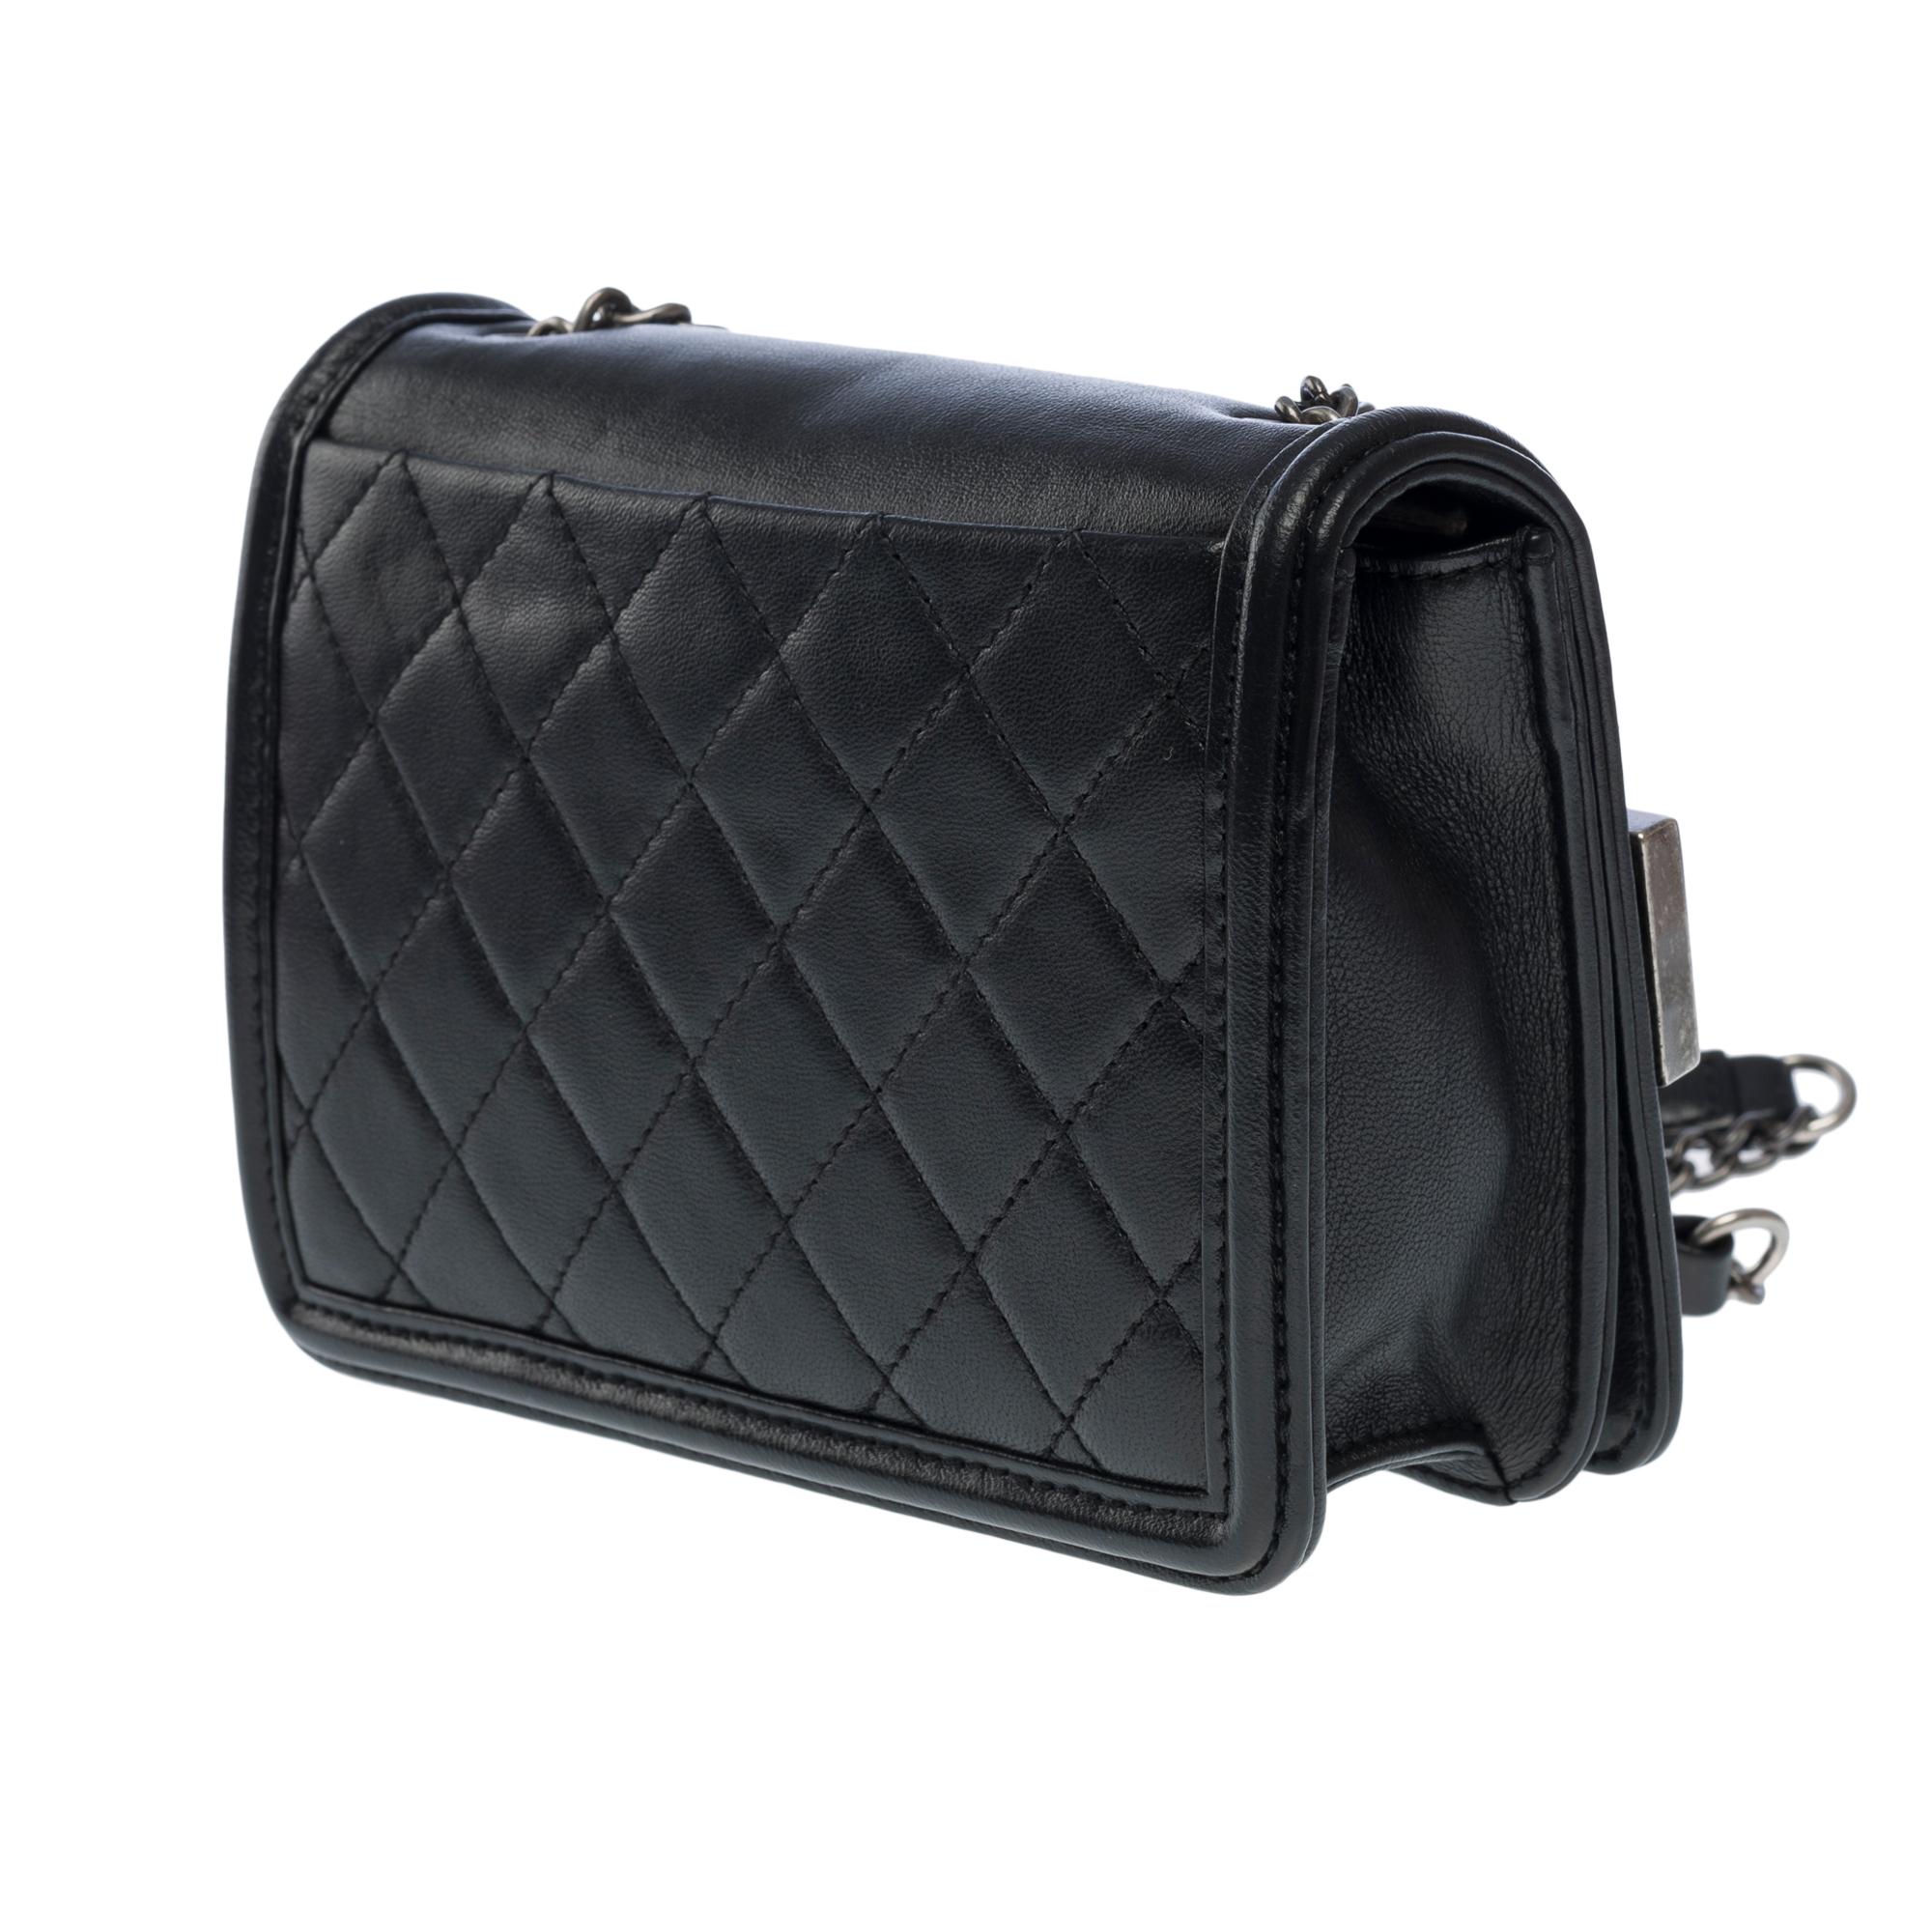 Women's Limited edition Chanel Mini Lego Brick shoulder flap bag in Black leather, RHW